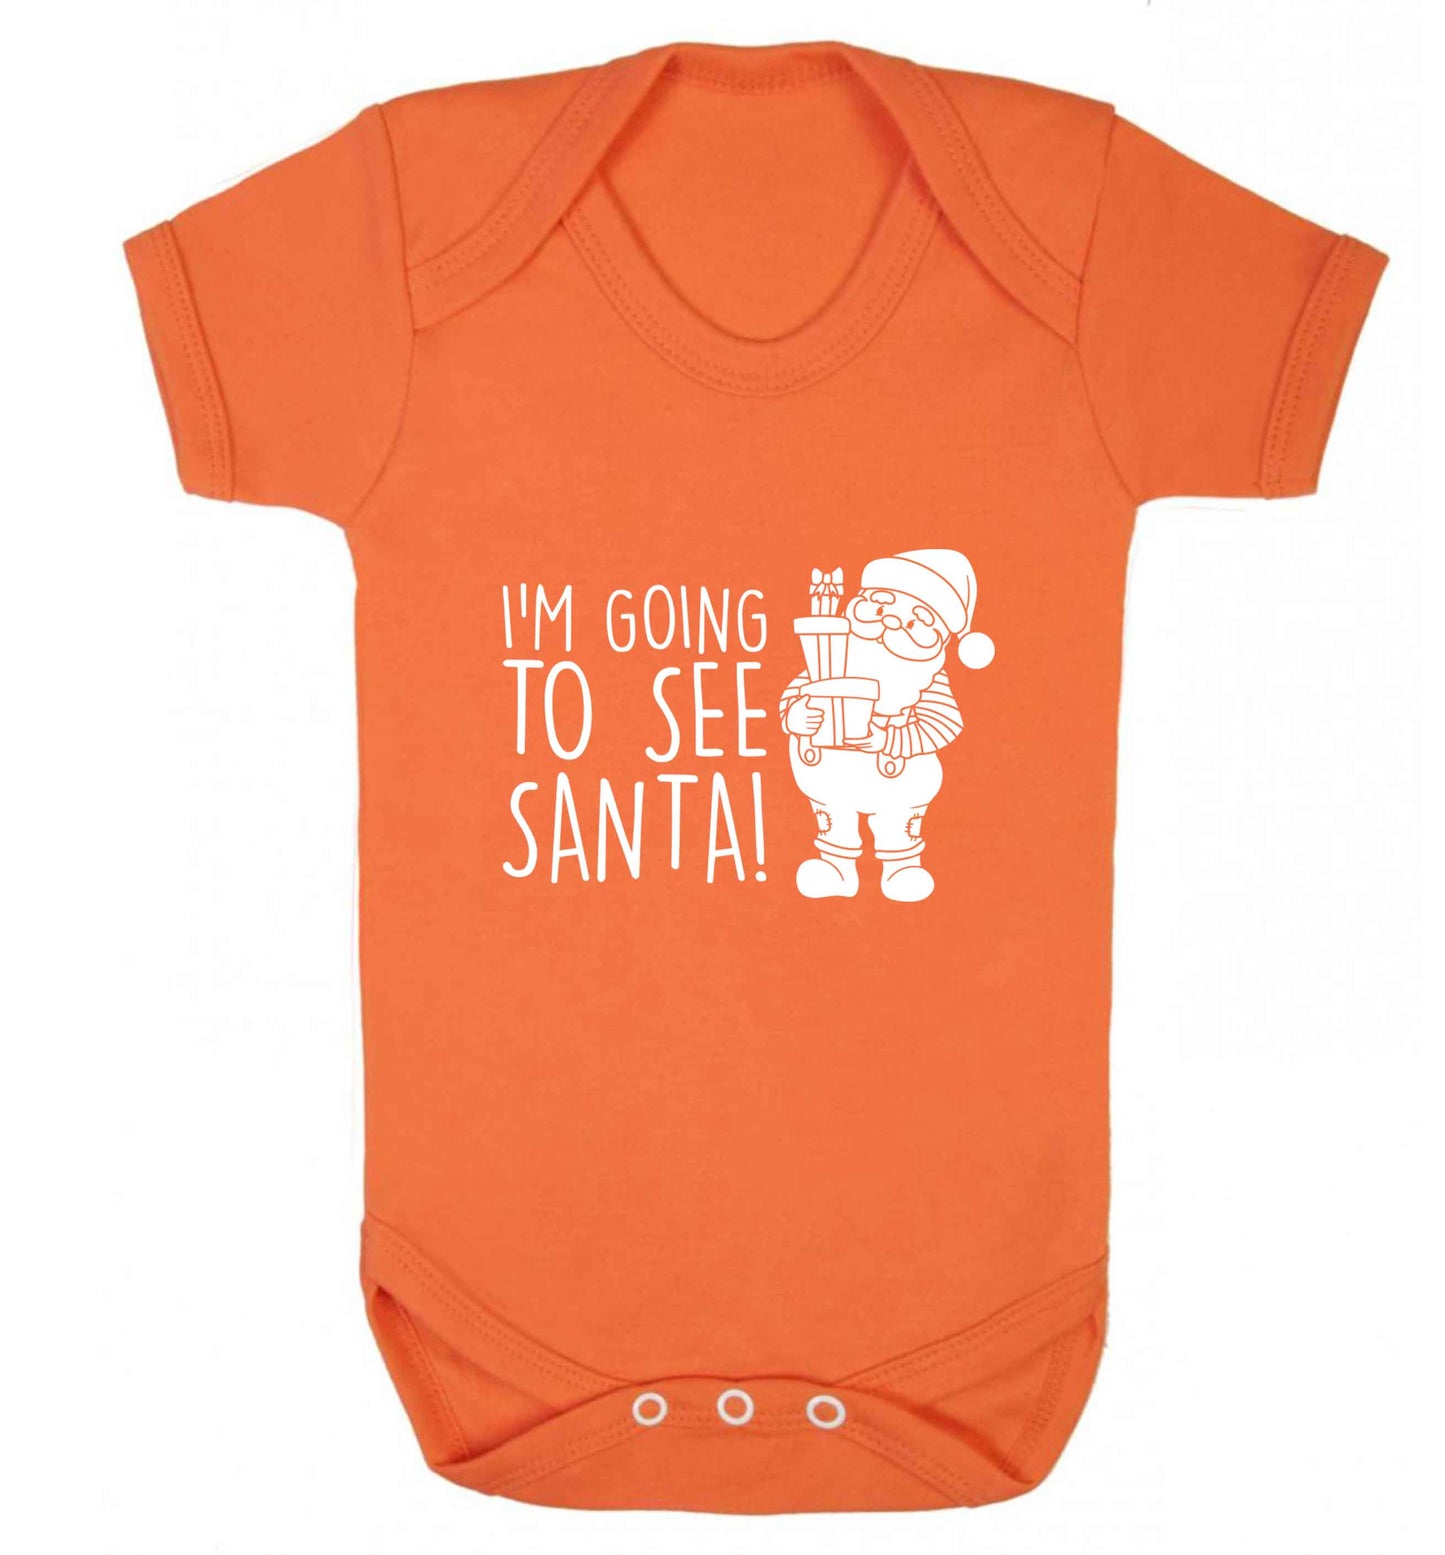 Merry Christmas baby vest orange 18-24 months